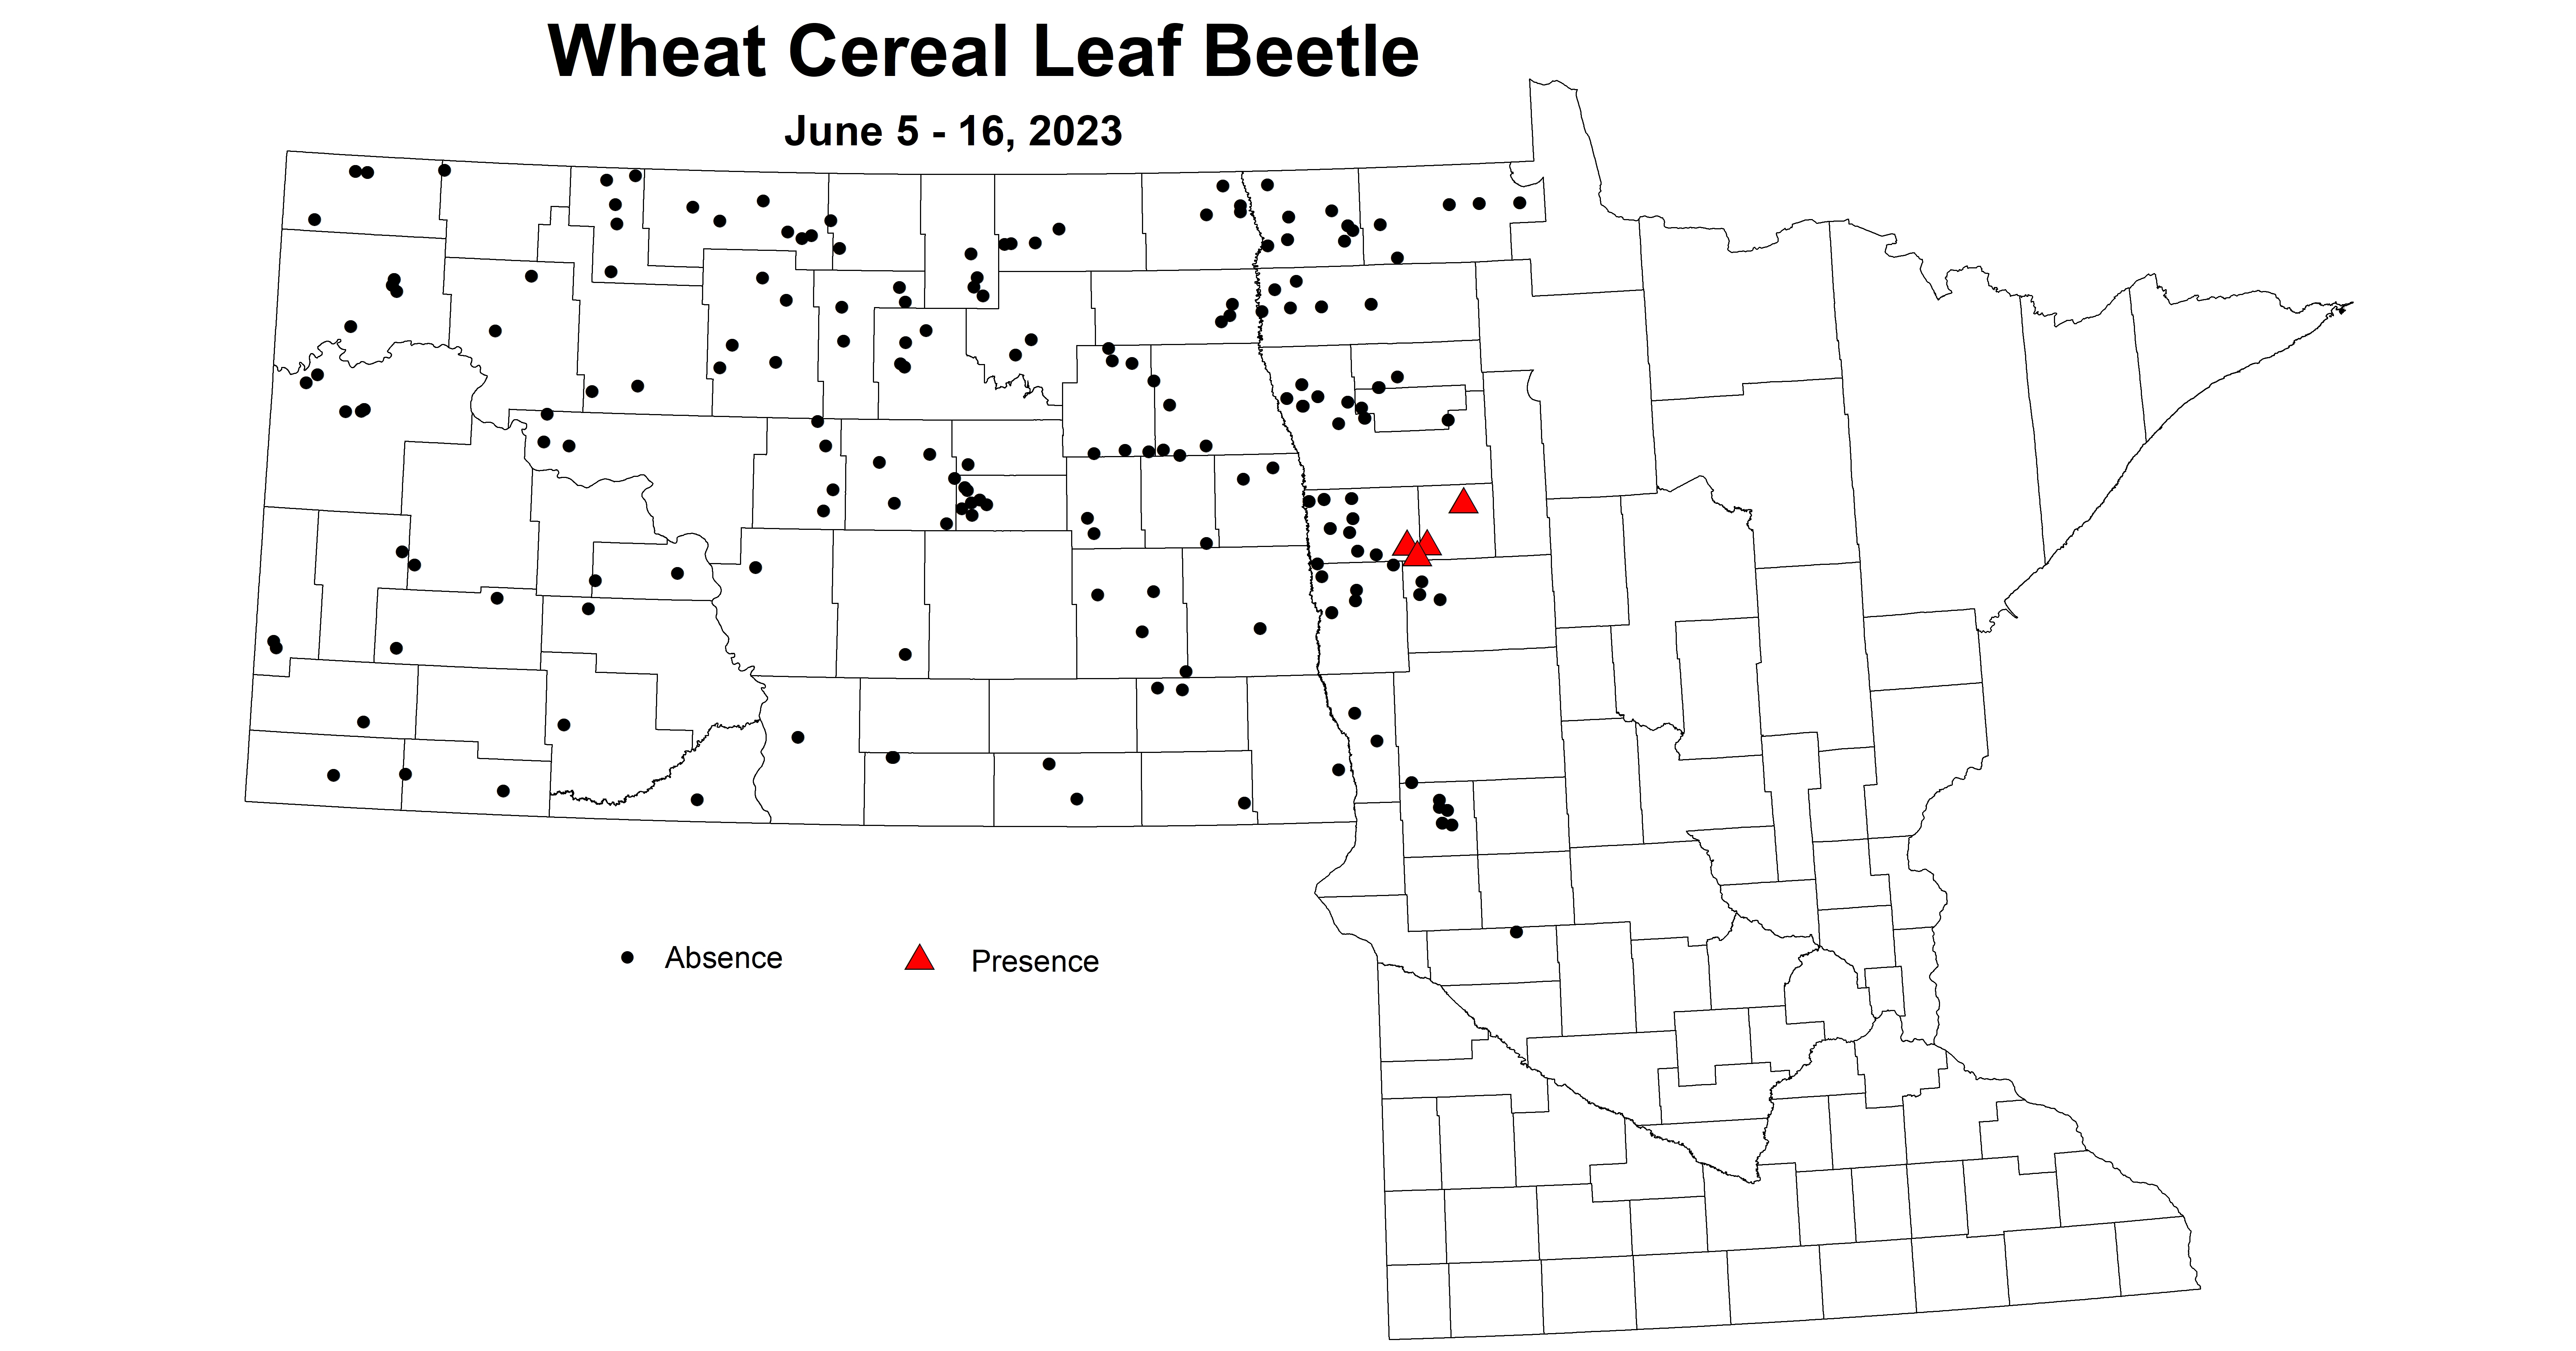 wheat cereal leaf beetle June 5-16 2023